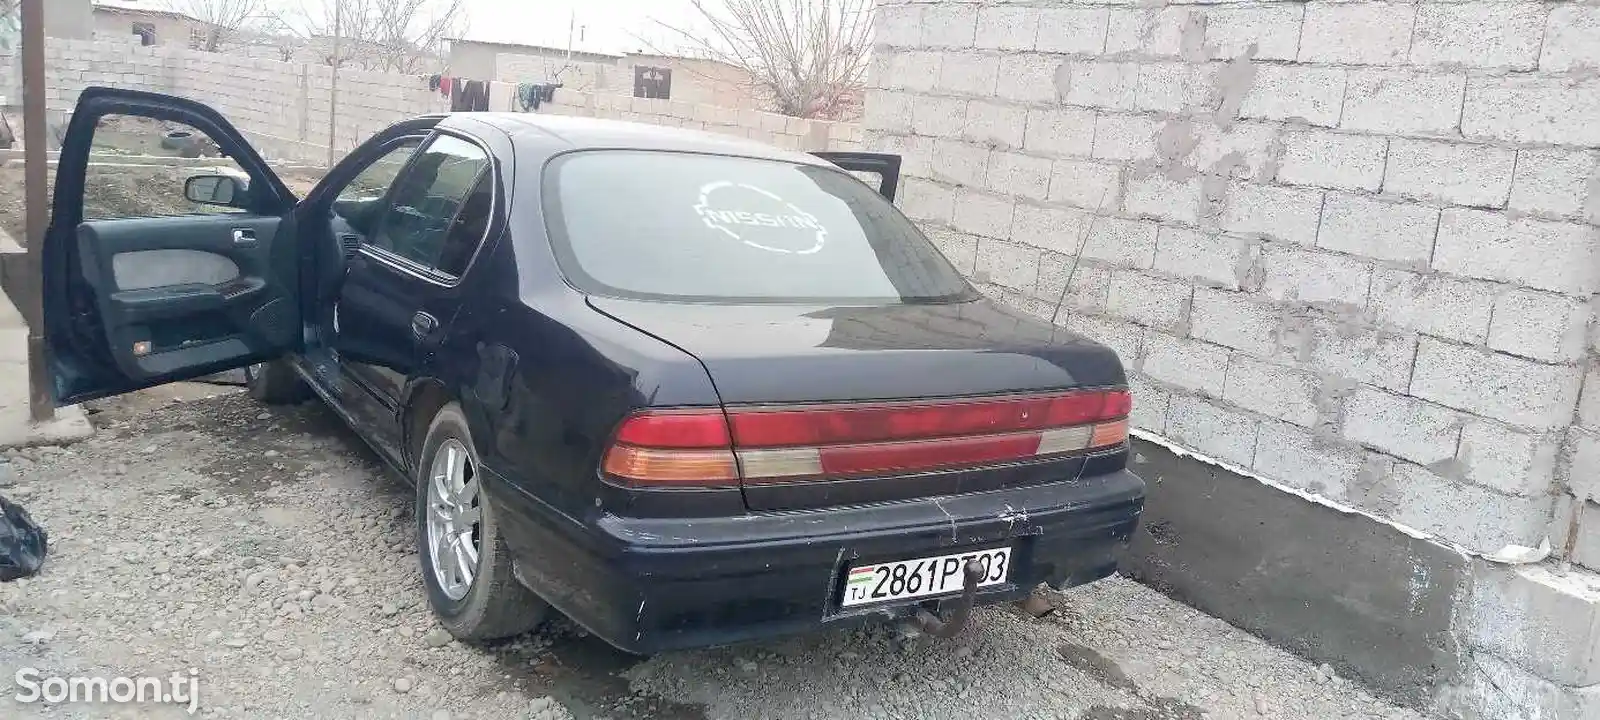 Nissan Cefiro, 1996-3